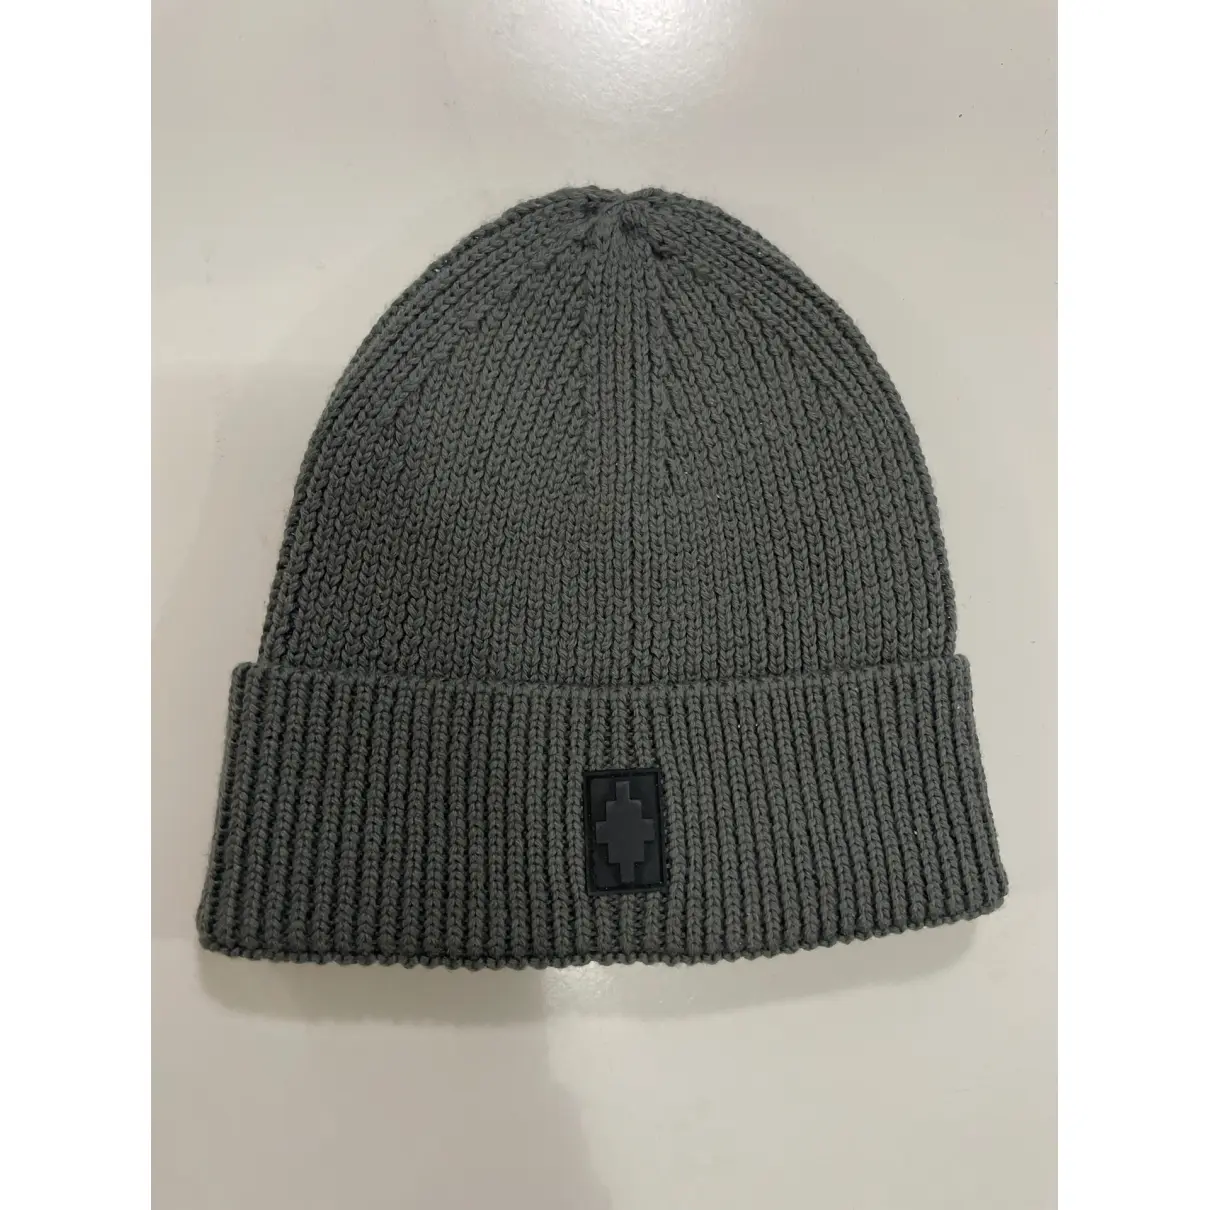 Buy Marcelo Burlon Wool hat online